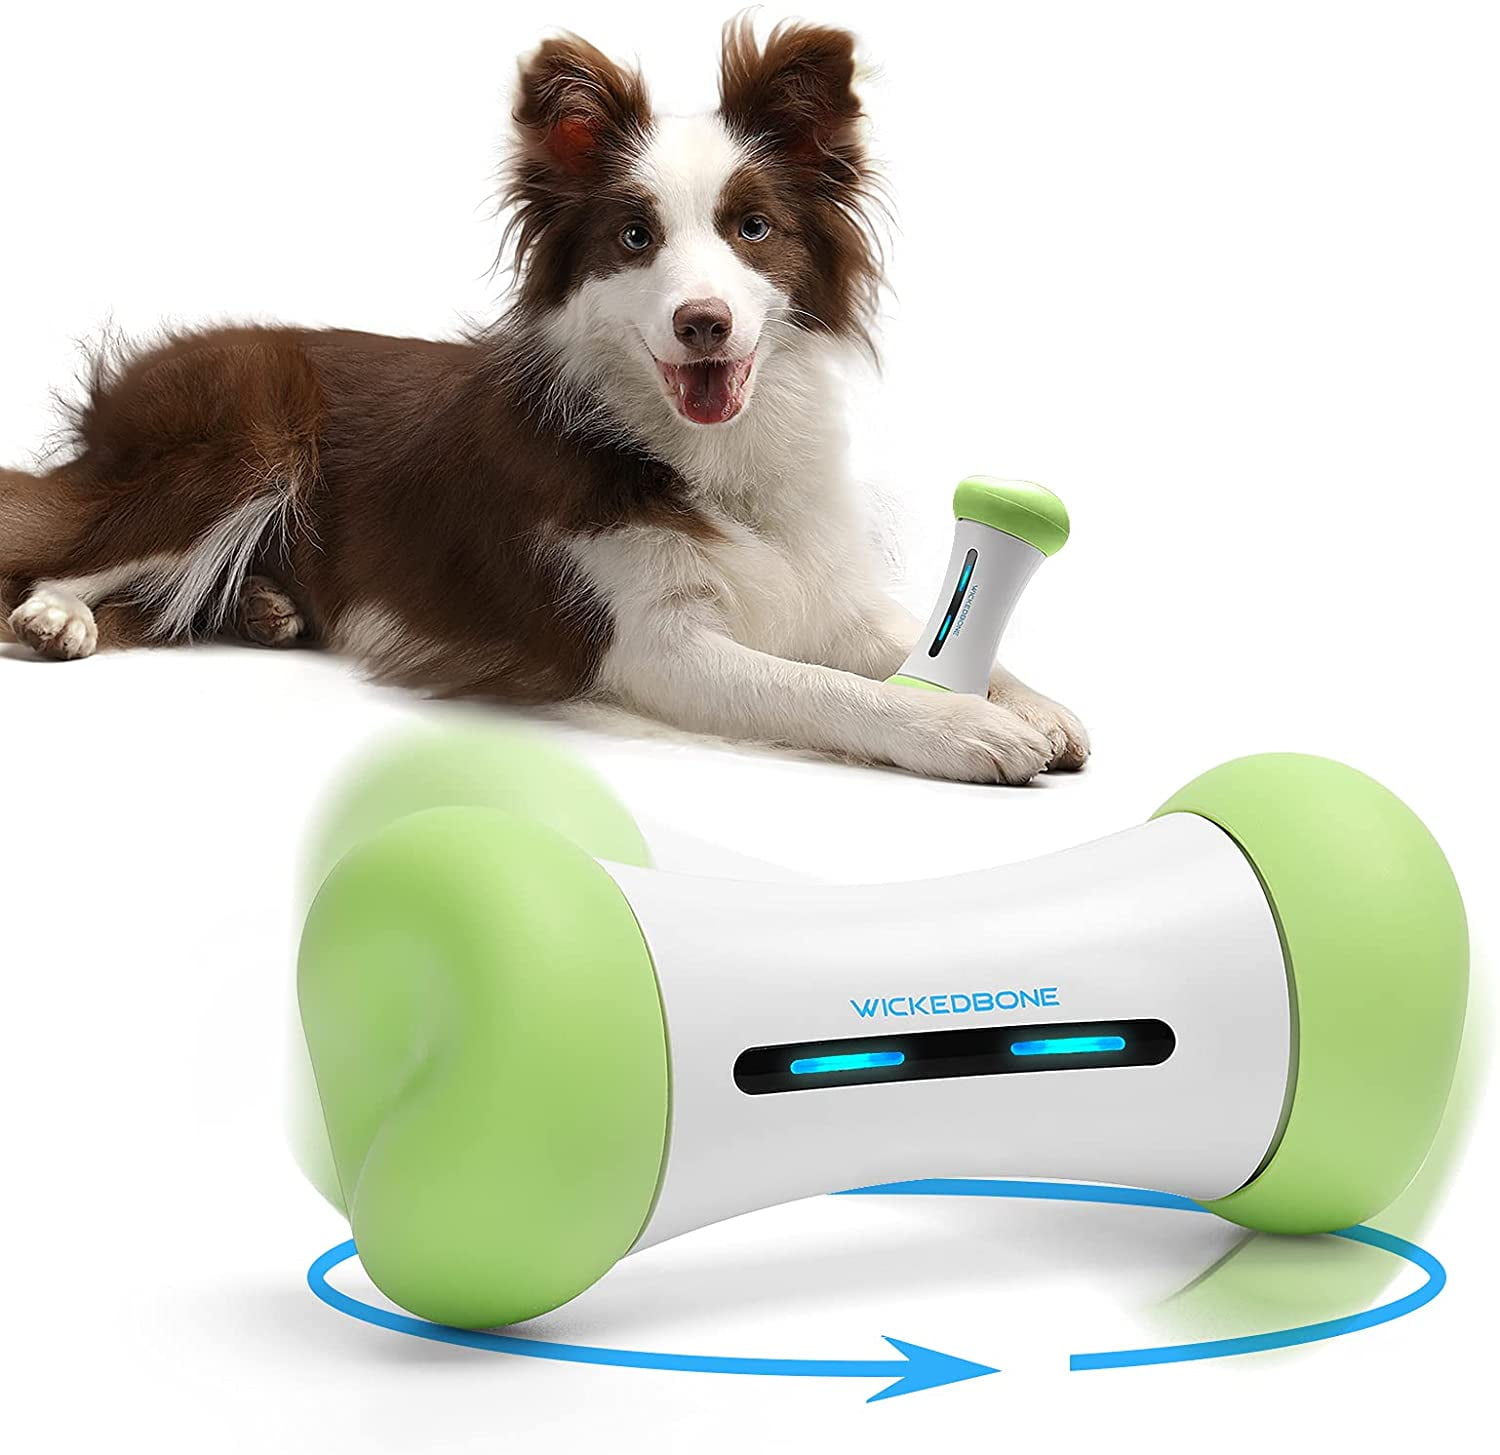 WICKEDBONE: World's First Smart & Interactive Dog Toy by Cheerble